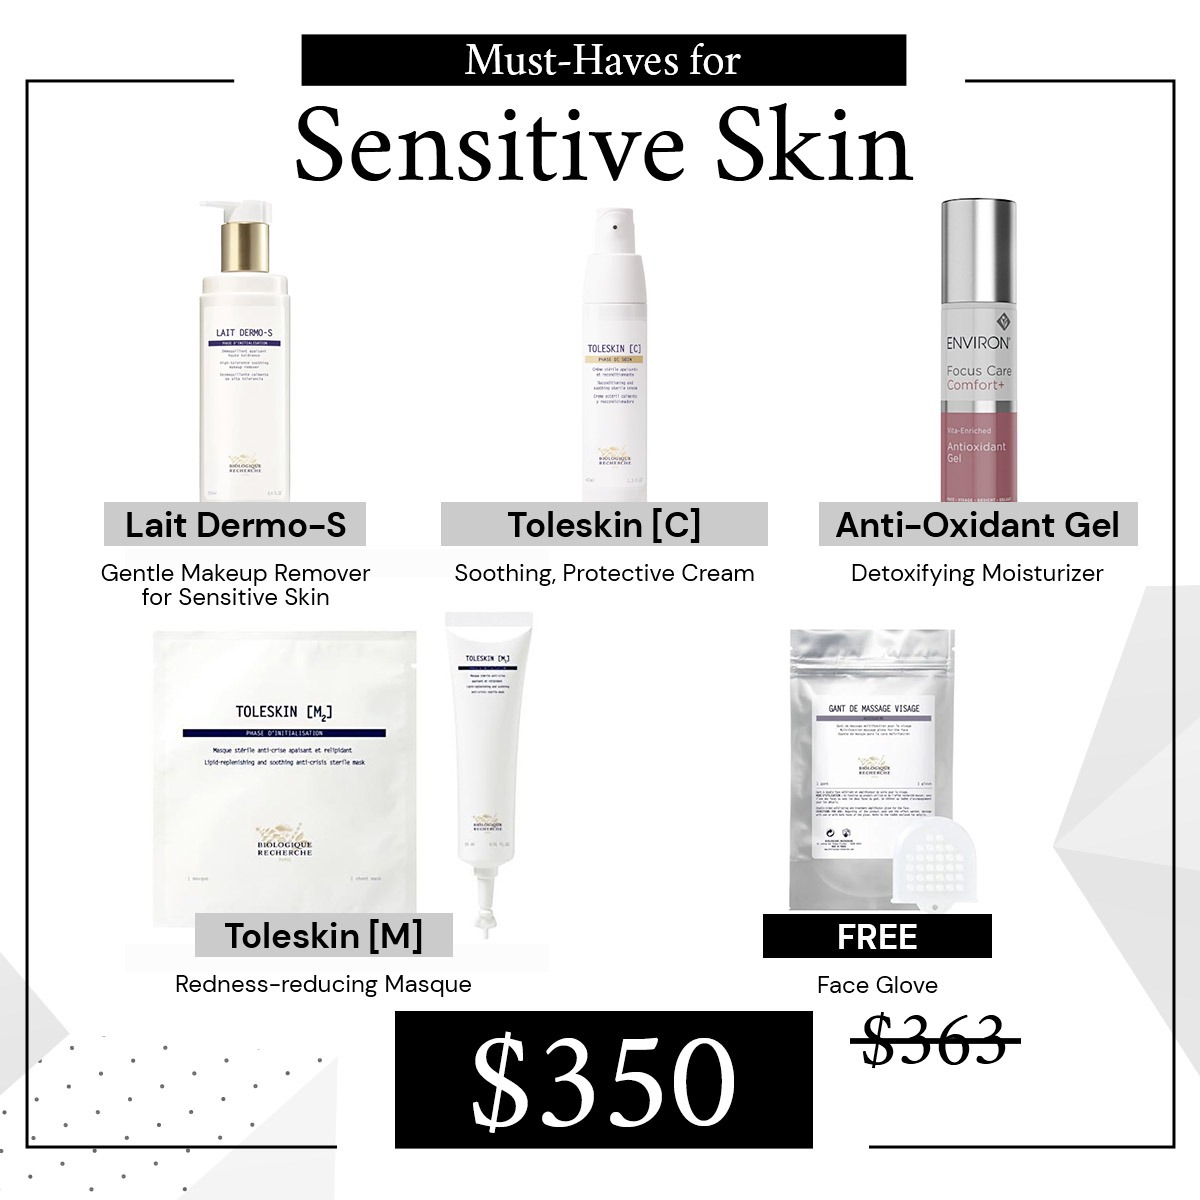 Must-Haves for Sensitive Skin